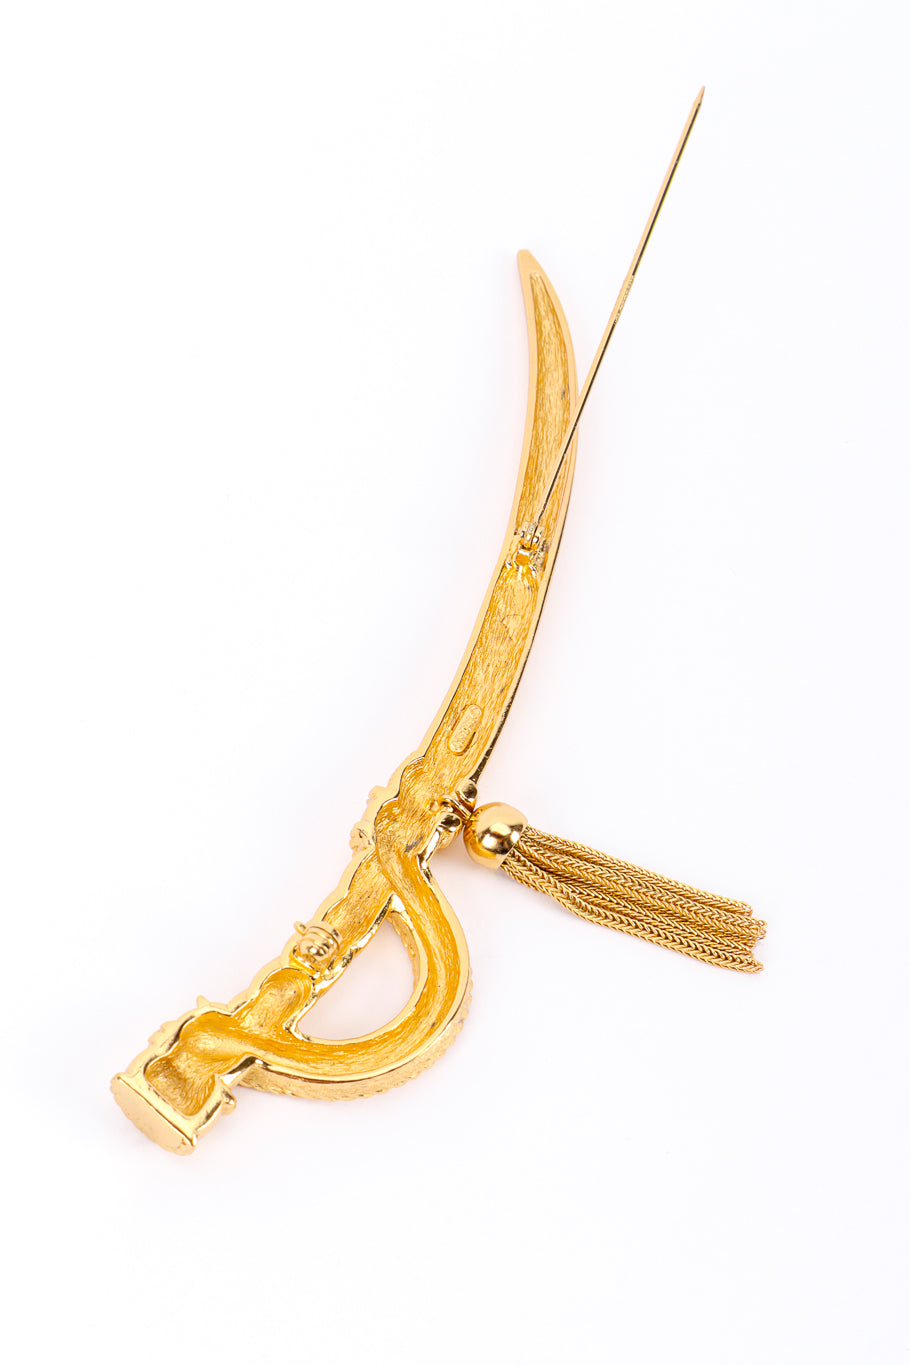 Vintage Christian Dior Saber Sword Brooch pin unhinged @recessla